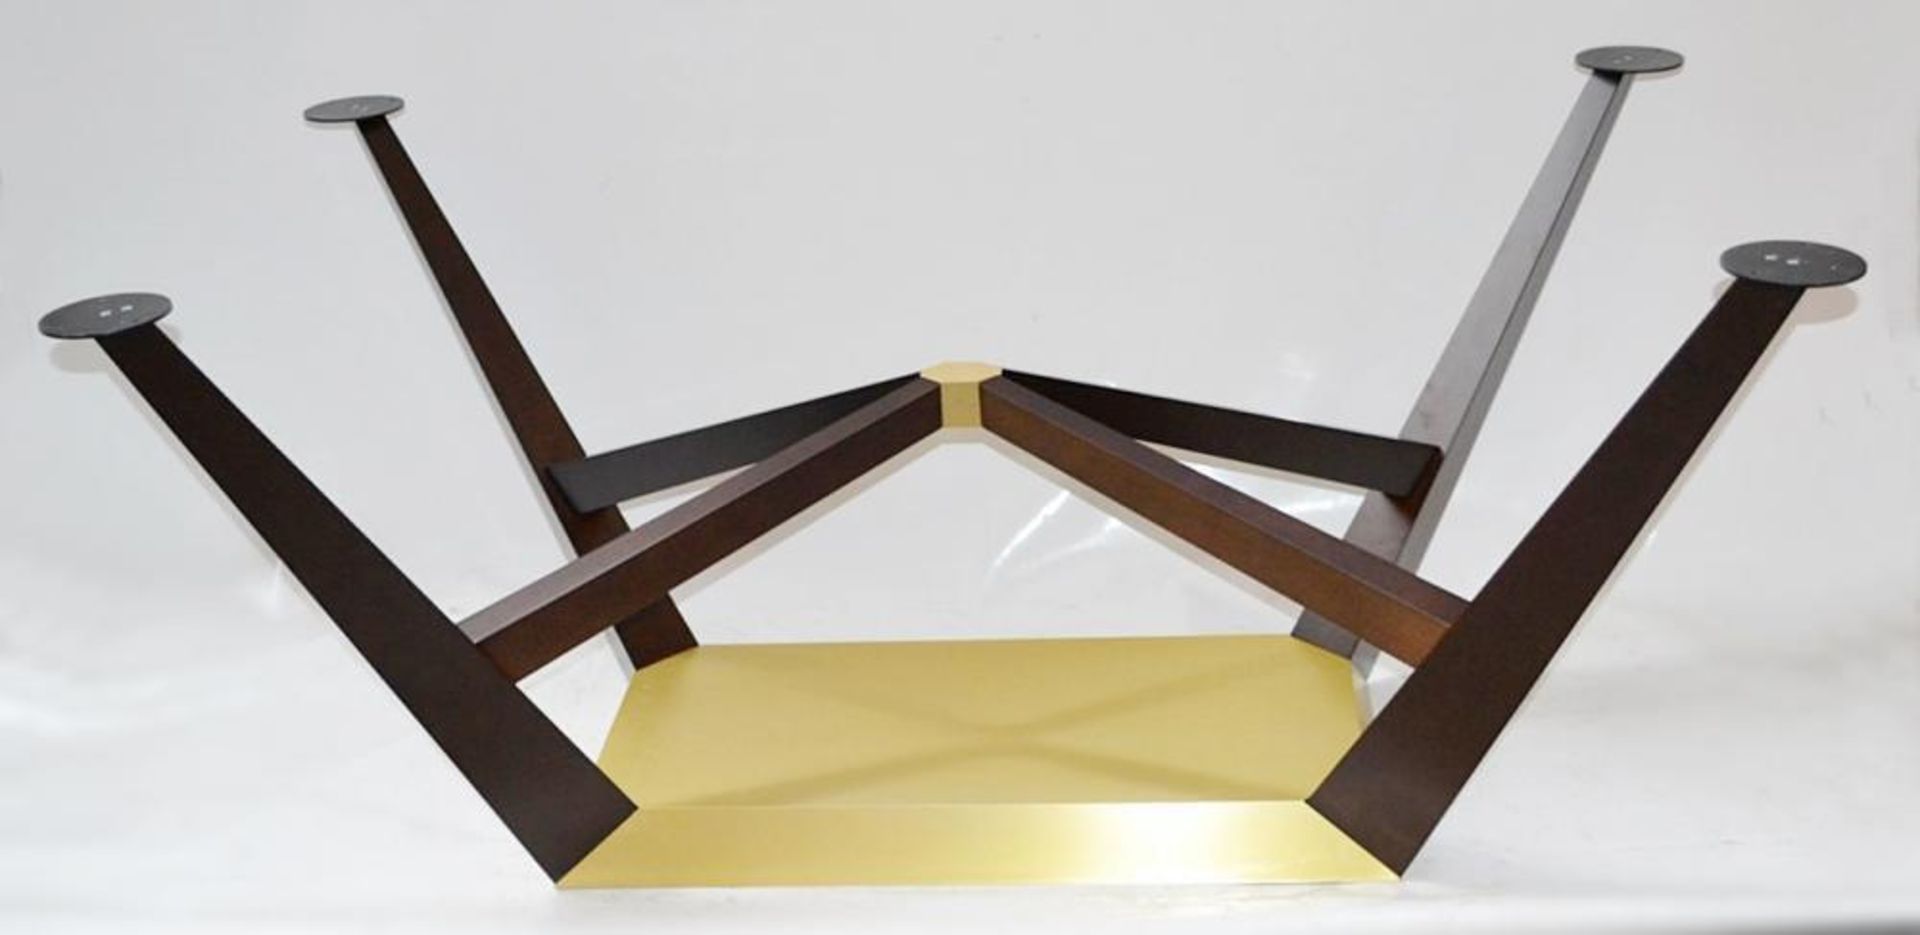 1 x PORADA Ellington Dining Table (Base Only) - Ref: 5568978 - Dimensions: W160 x D88 x H71cm - CL01 - Image 2 of 5